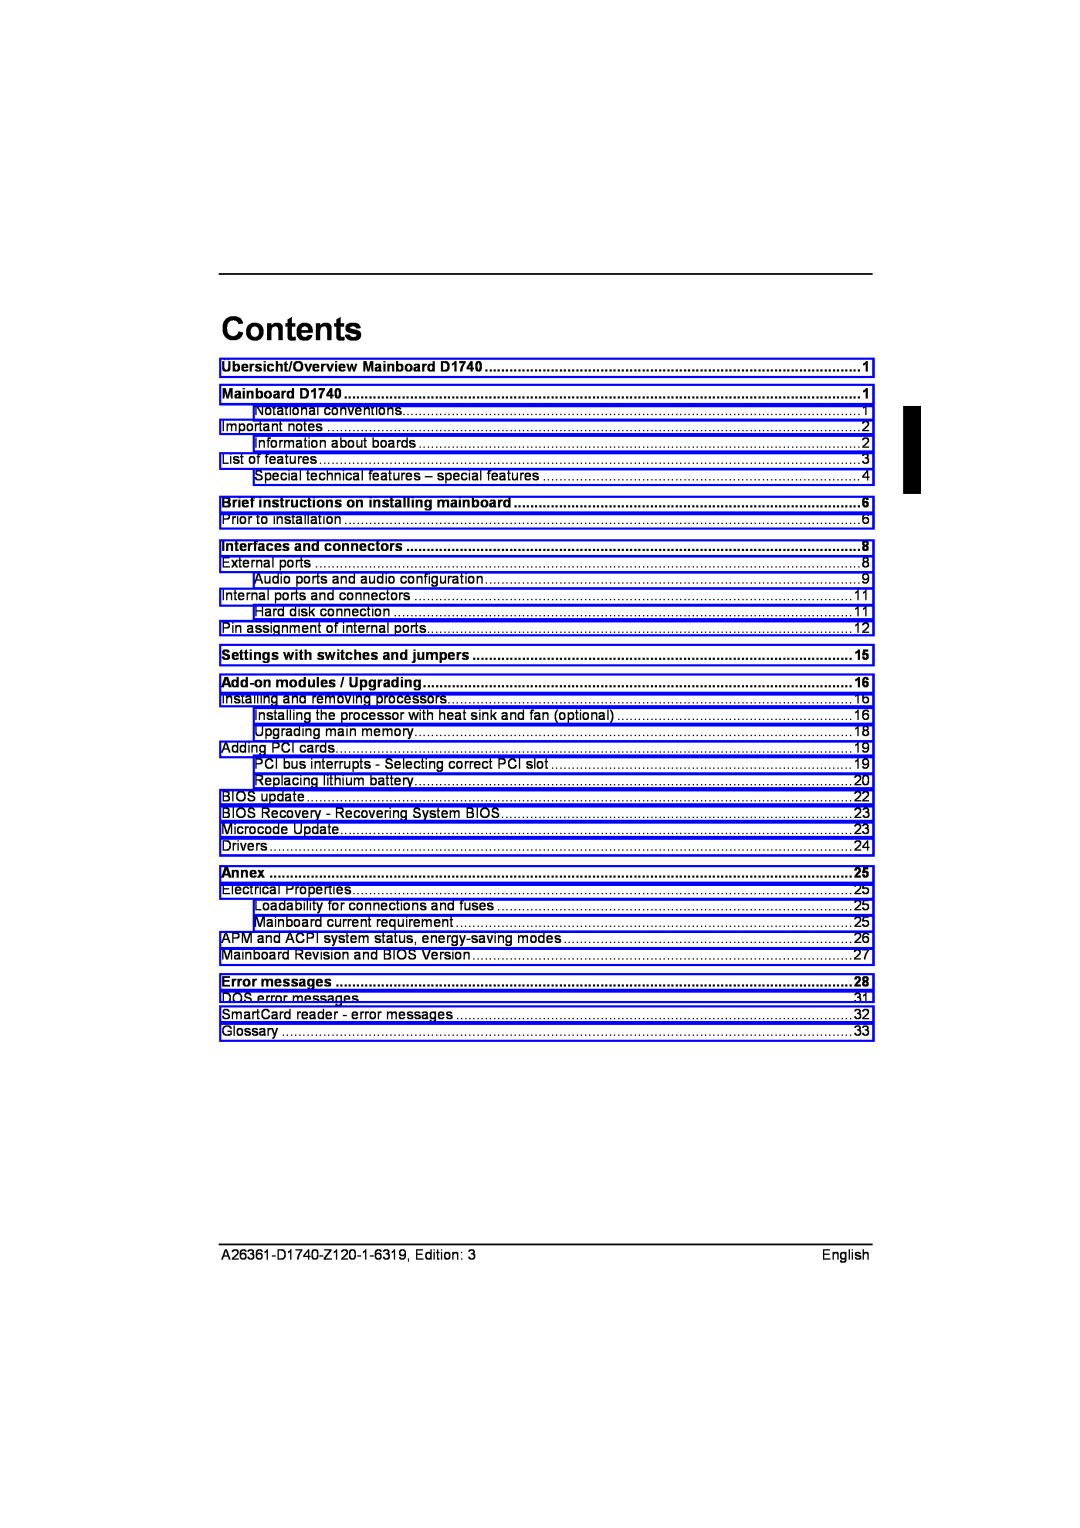 Fujitsu D1740 technical manual Contents, Annex 